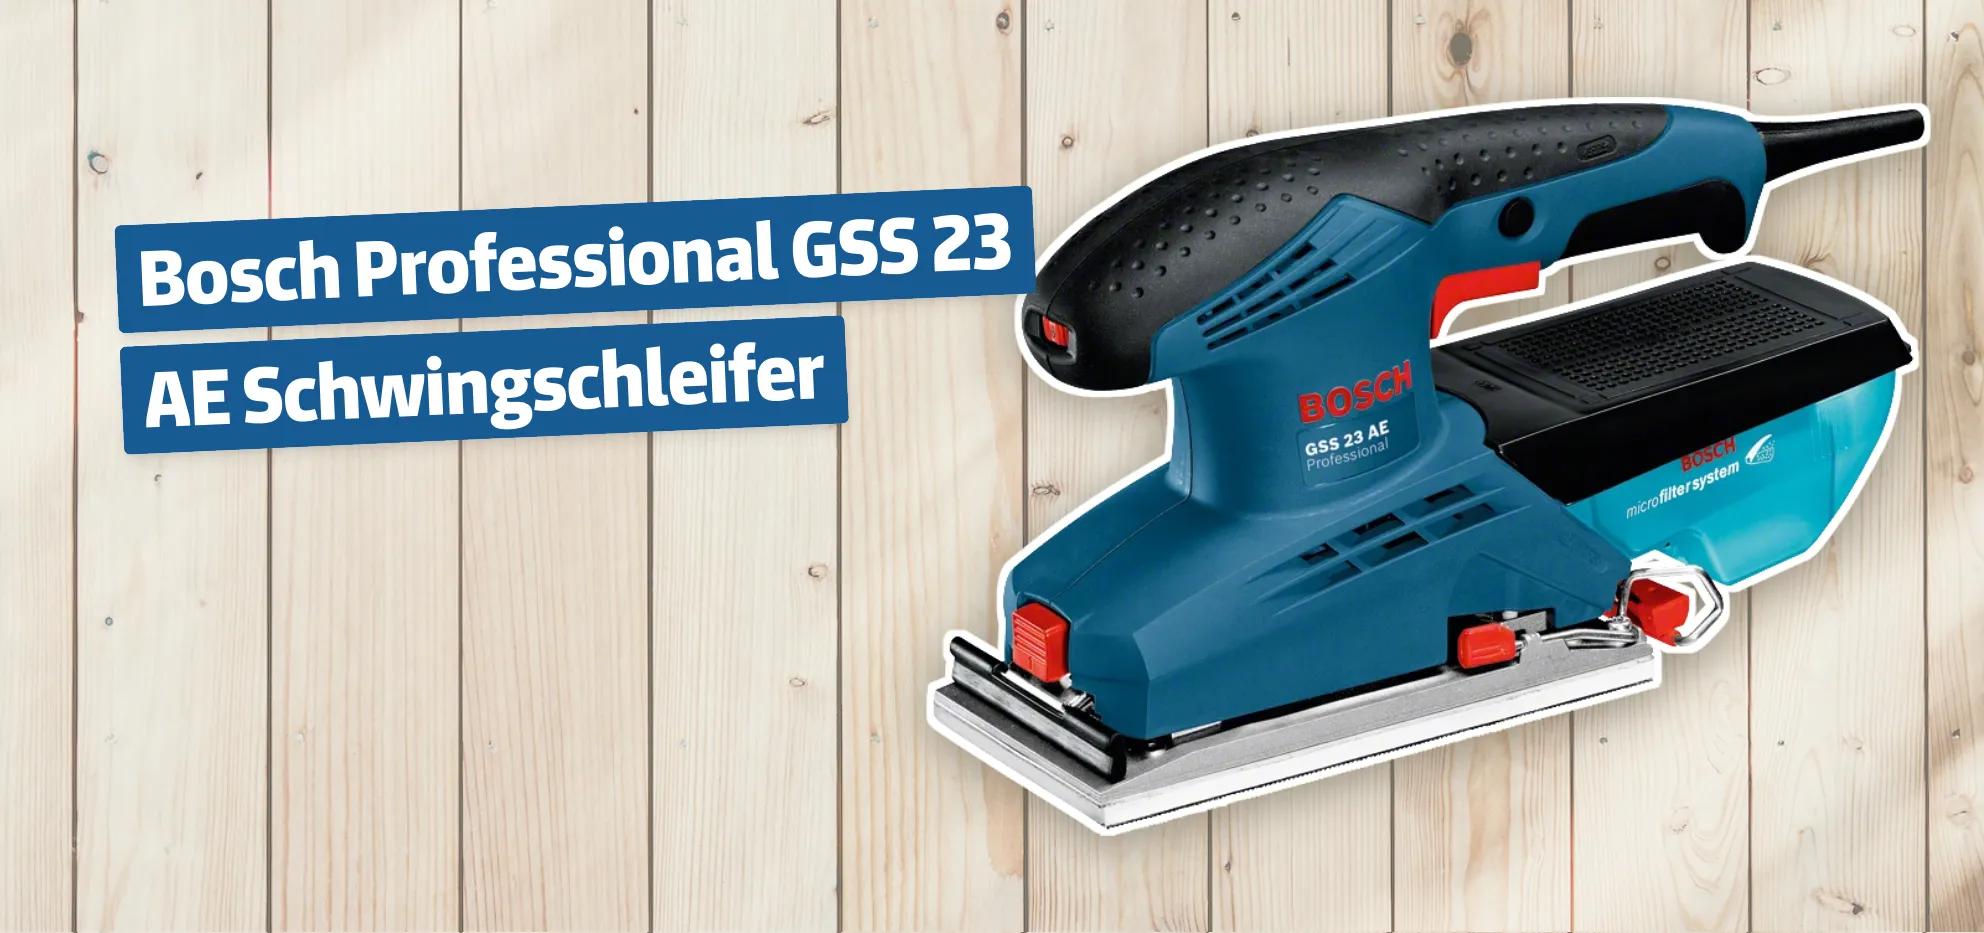 Bosch Professional GSS 23 AE Schwingschleifer